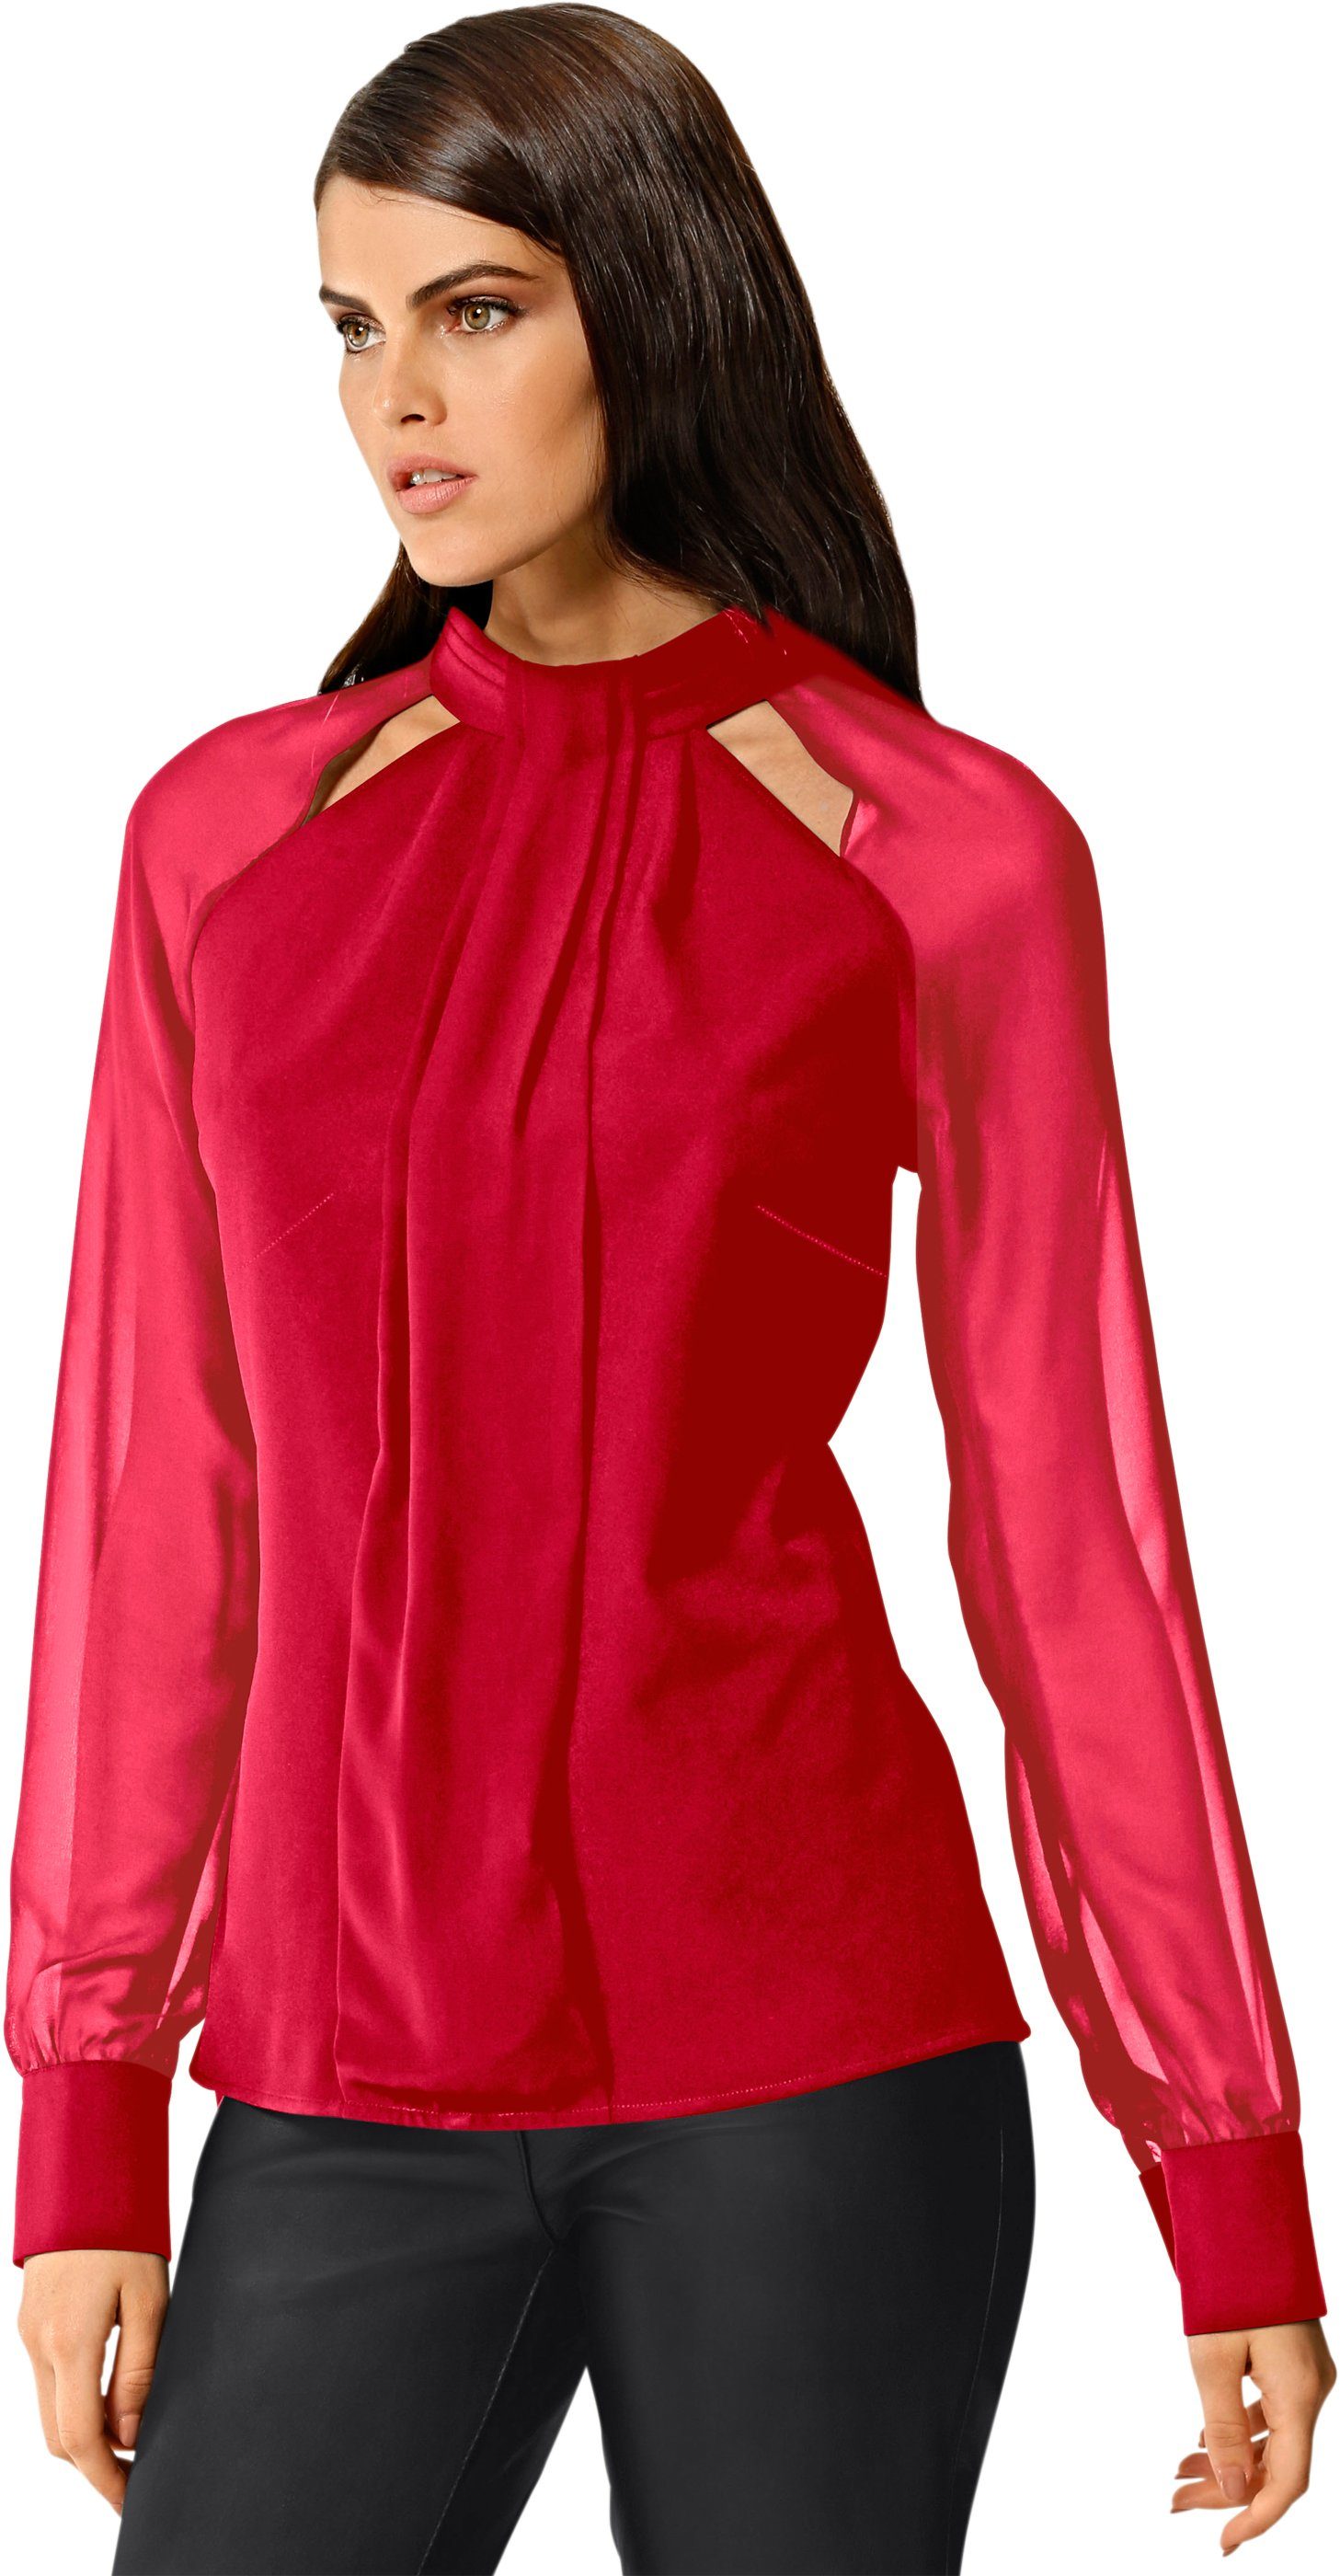 Lady NU 15% KORTING: Lady blouse met mouwen in chiffonkwaliteit